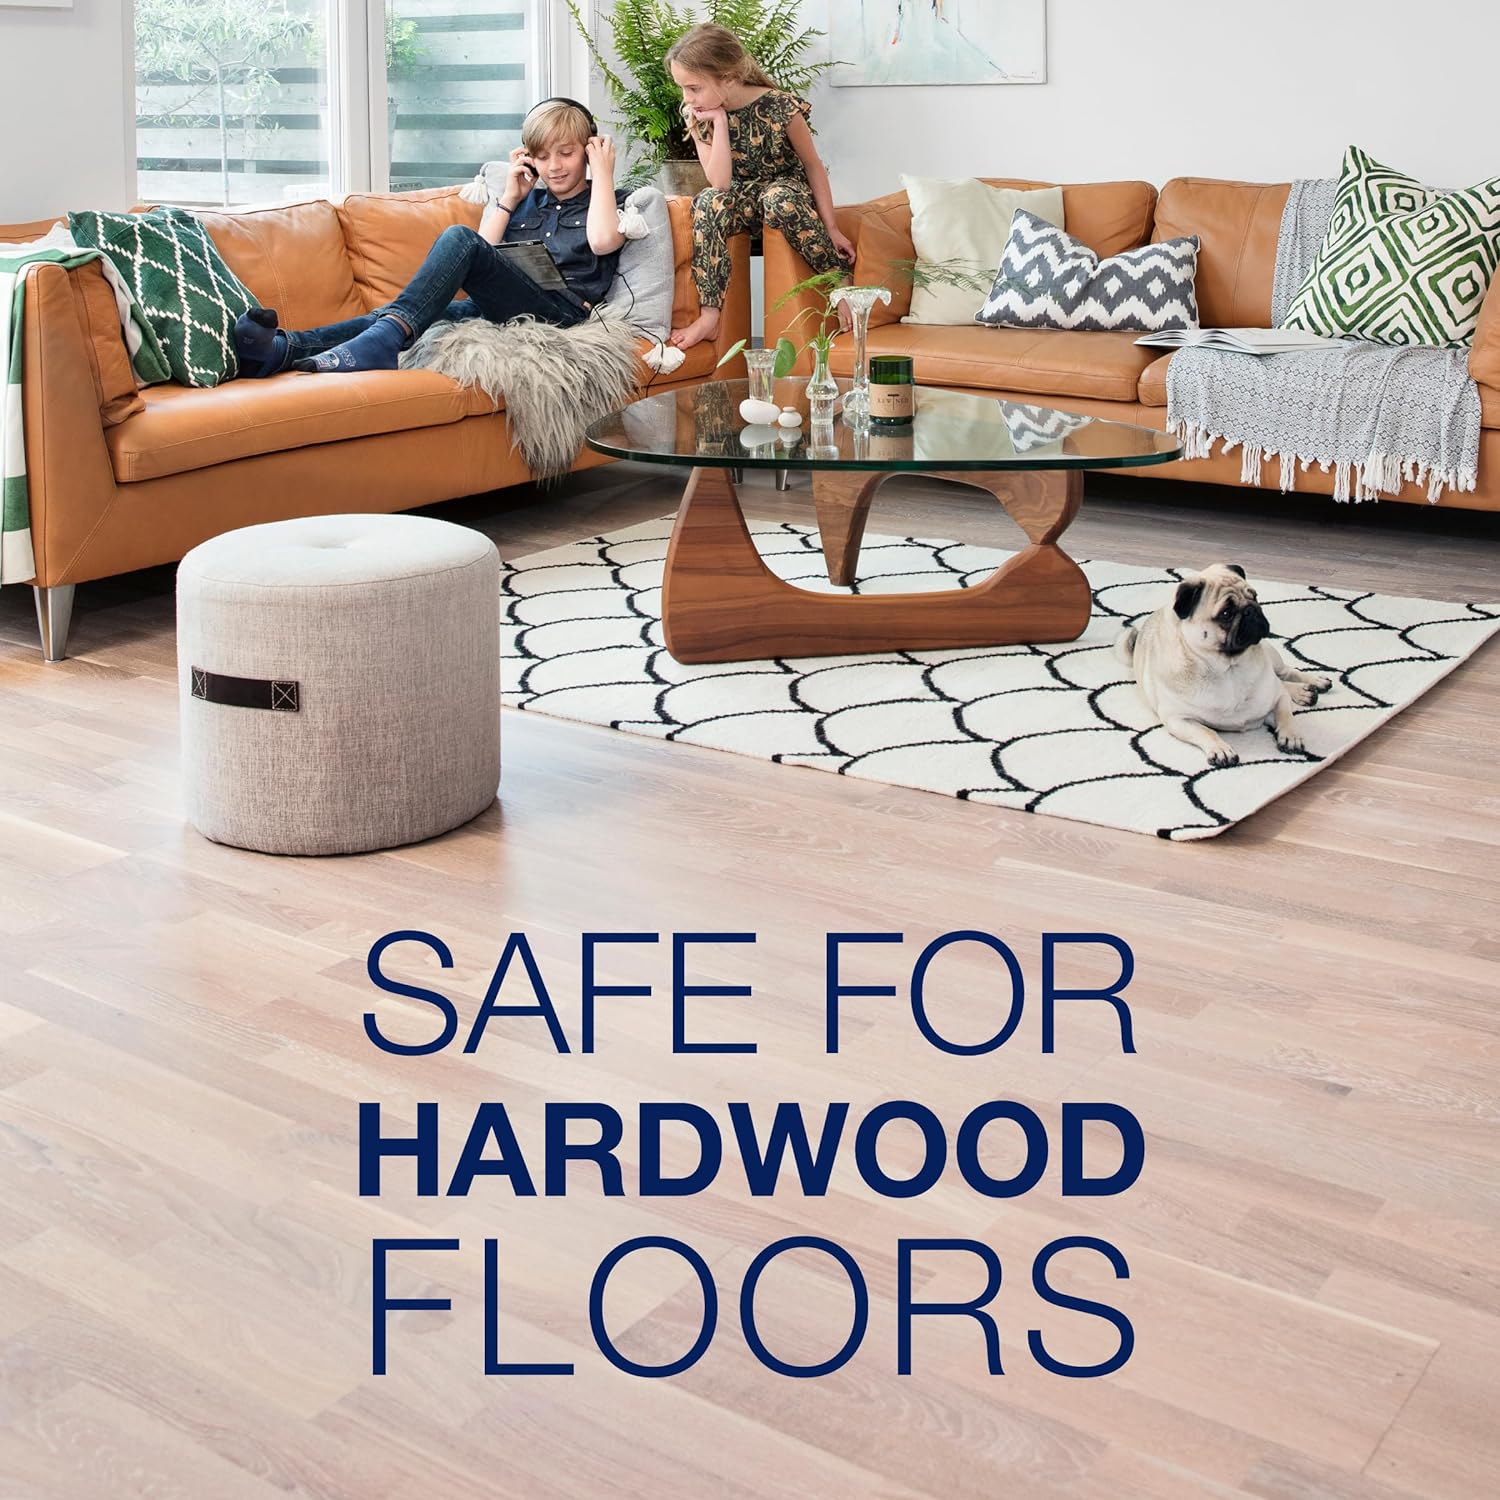 Bona Hardwood Floor Polish - 32 fl oz - Low Gloss Shine - 32 oz covers 500sq ft of flooring - for use on Wood Floors : Health & Household